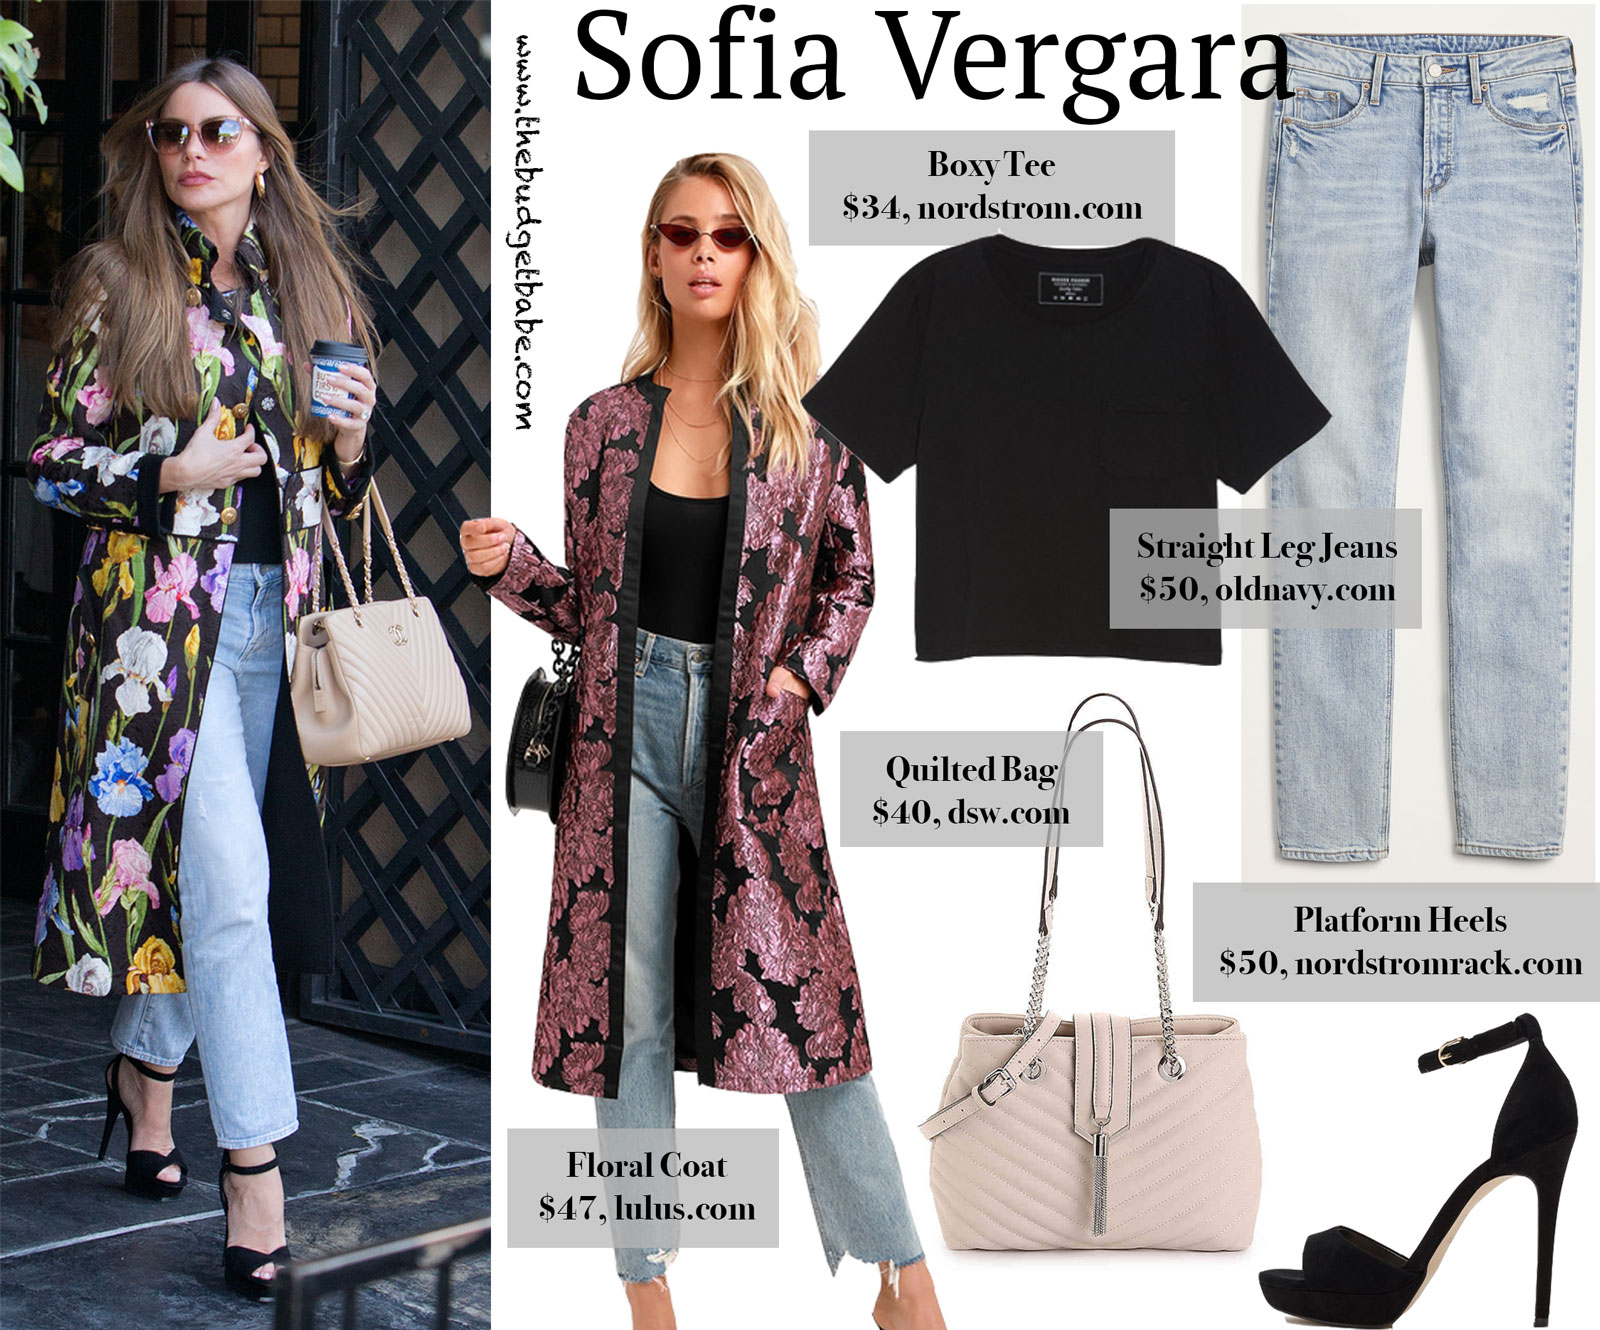 Sofia Vergara Floral Coat Look for Less